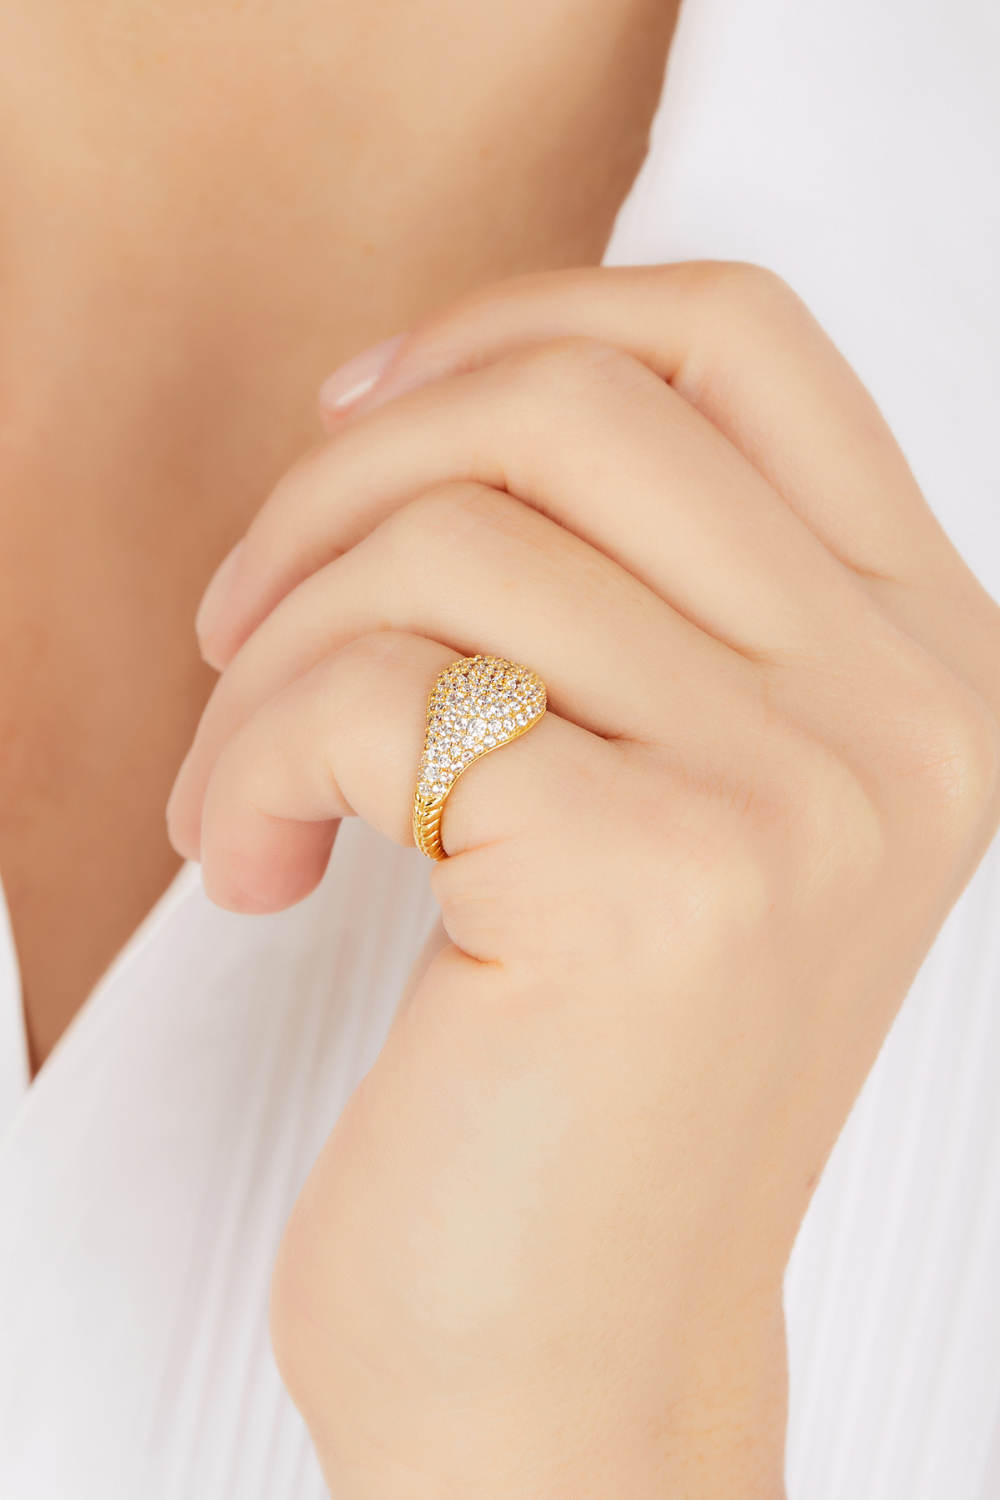 Speira pave gold vermeil signet ring